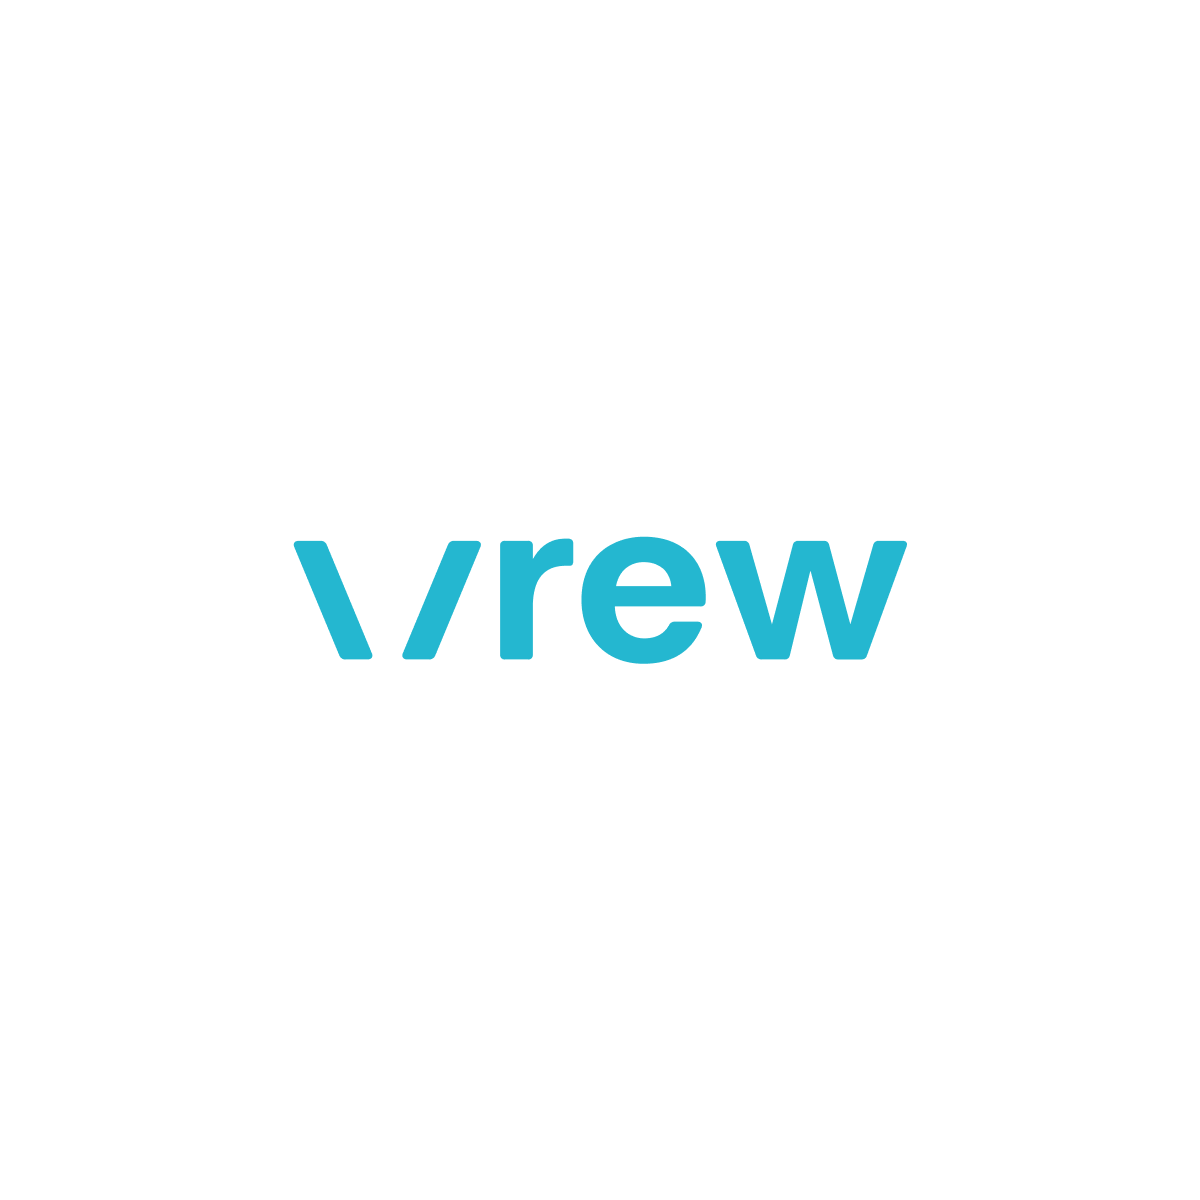 Vrew - 自動字幕で楽しむ動画編集